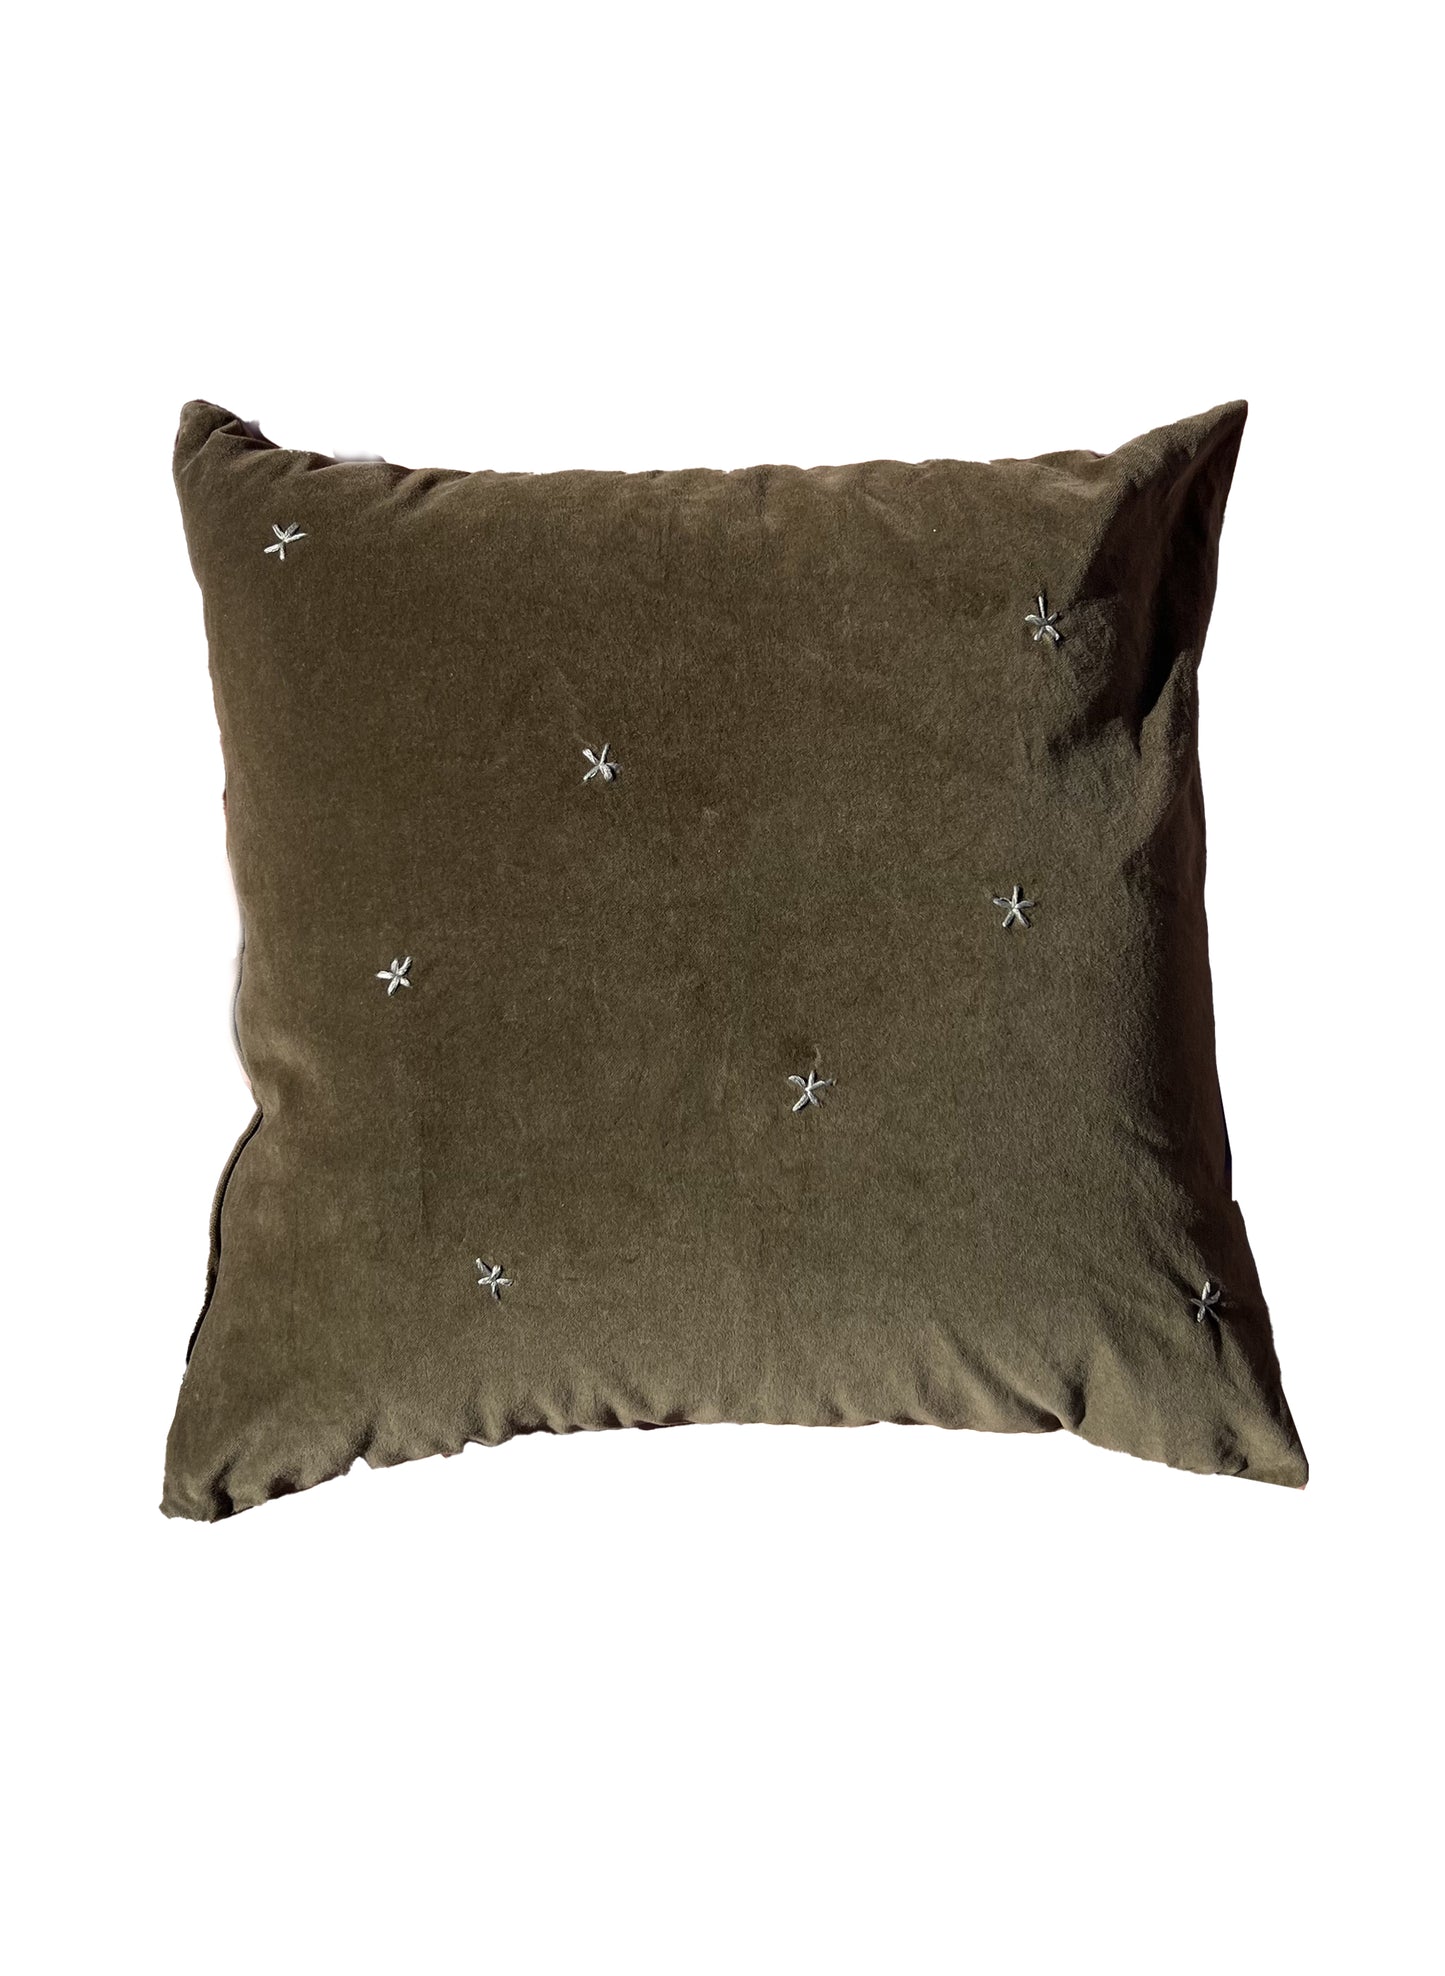 Throw Pillow Cover - Moss